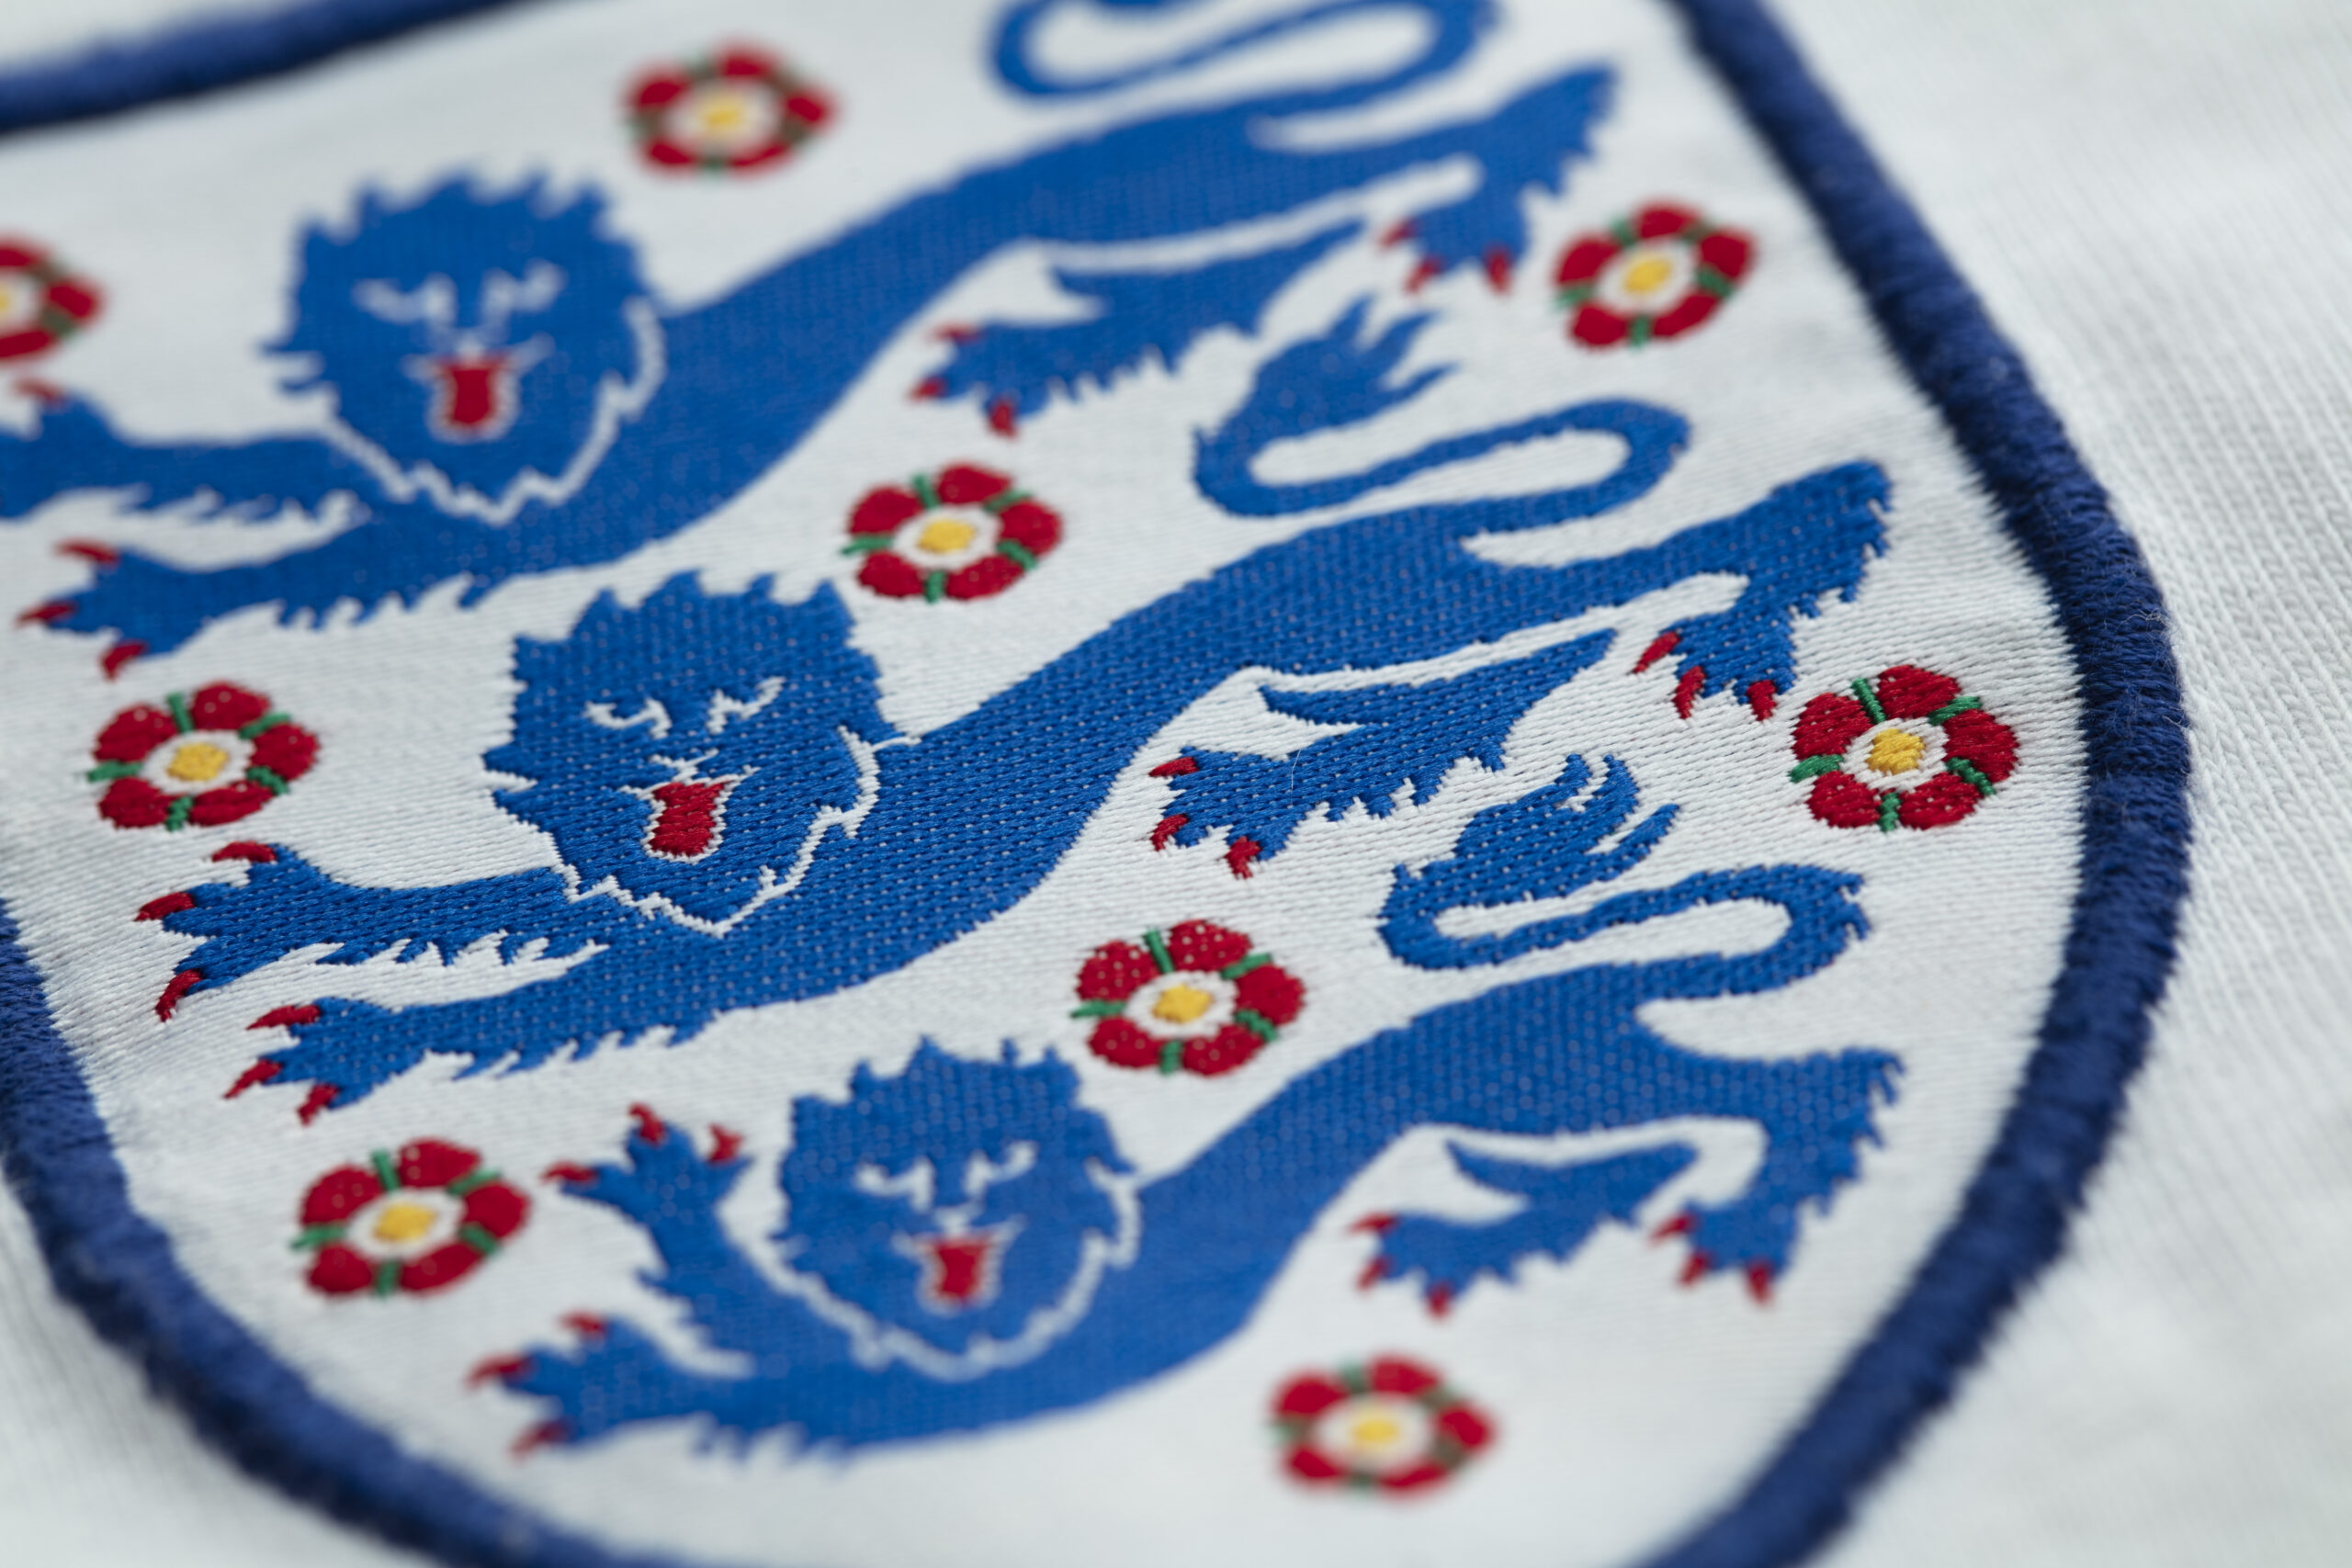 IMAGO Image ID: 0355646912 - LONDON, UK - August 2022: Three lions national emblem badge on an England football team shirt.